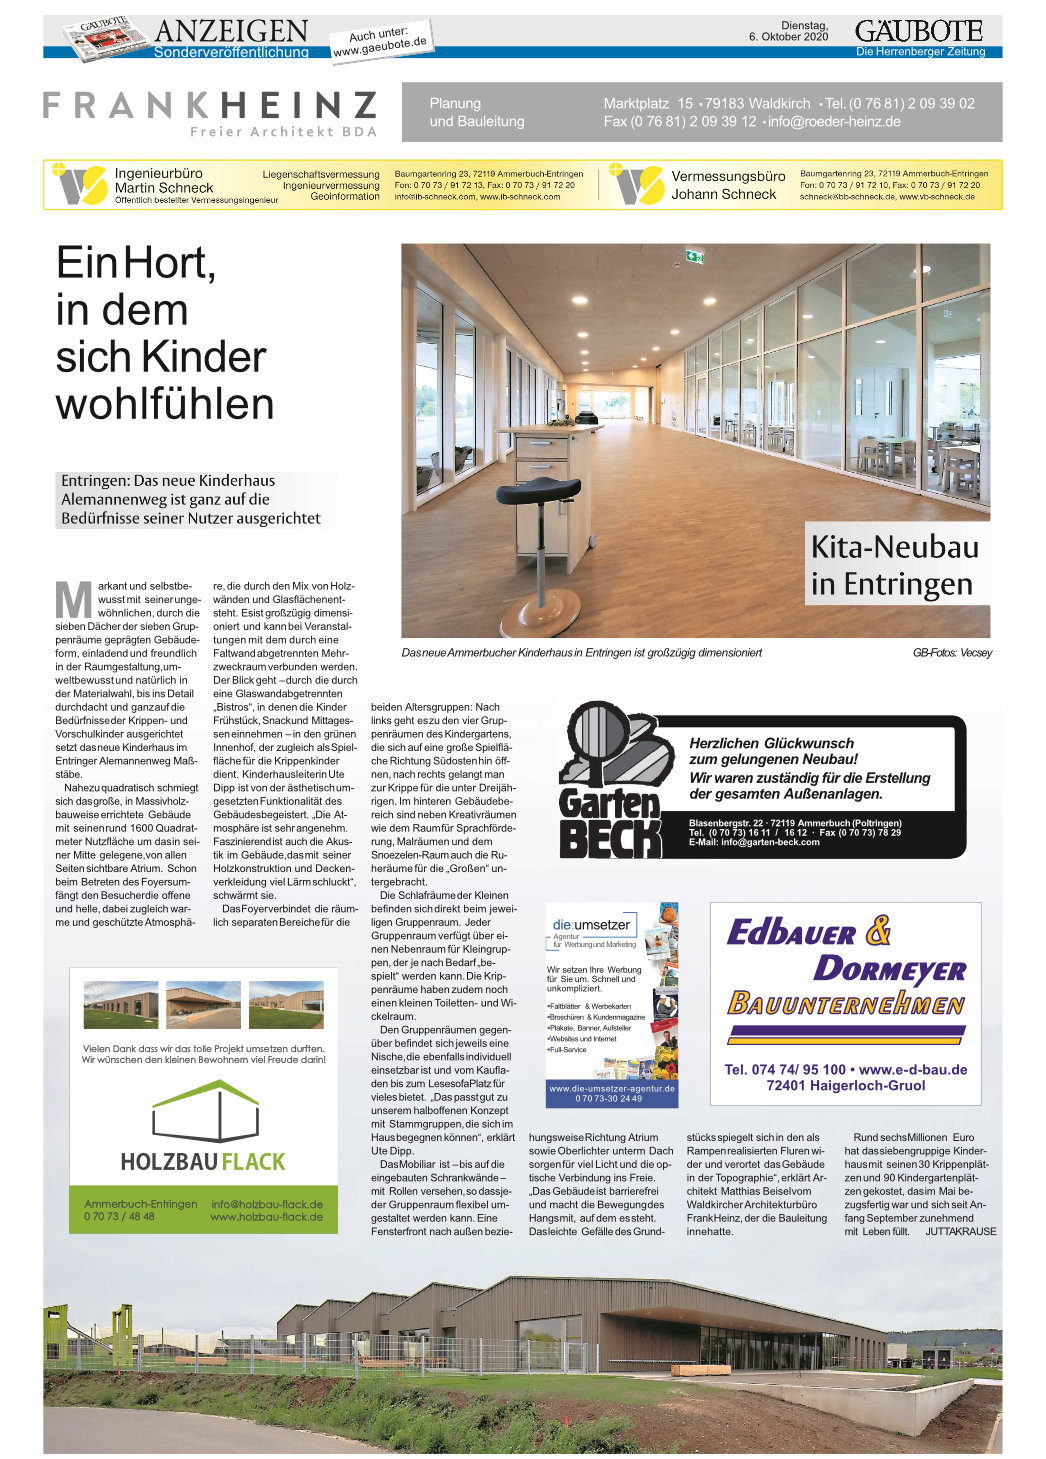 Holzbau-Flack Pressebericht Gäubote Kita Entringen am 06.10.2020